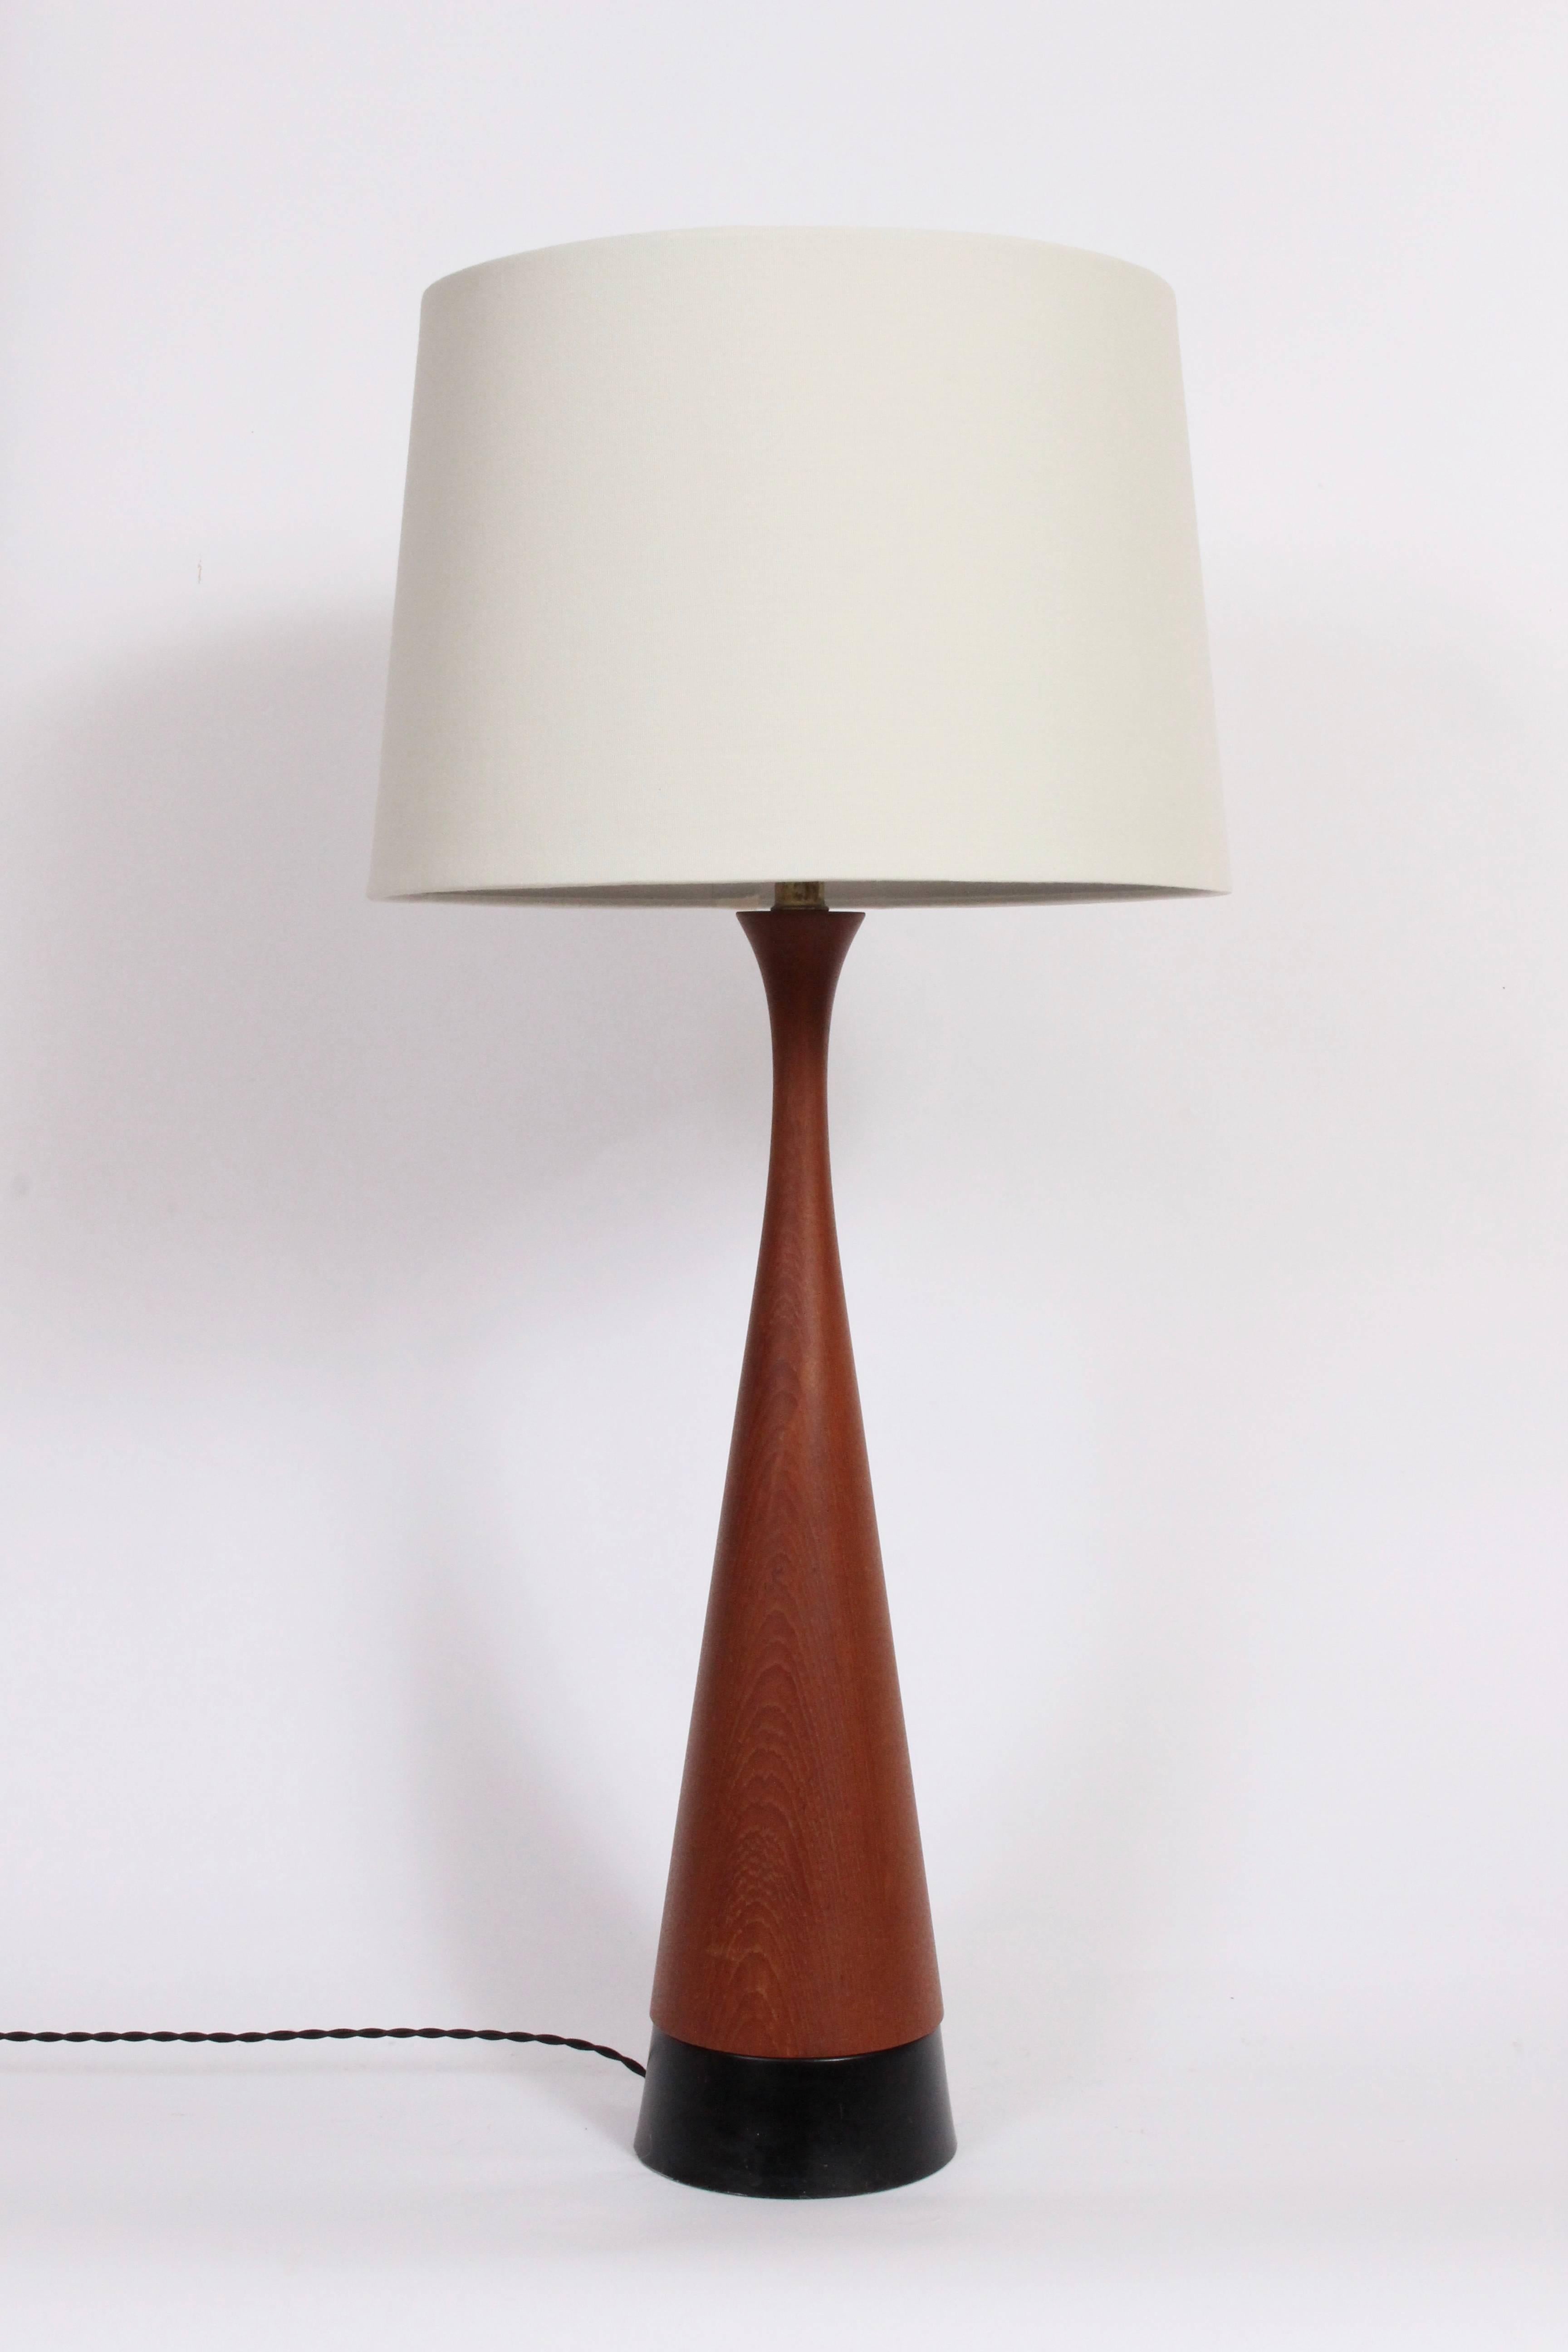 Tall Danish Modern Diablo Teak Table Lamp with Black Enamel Base, c. 1960 For Sale 2